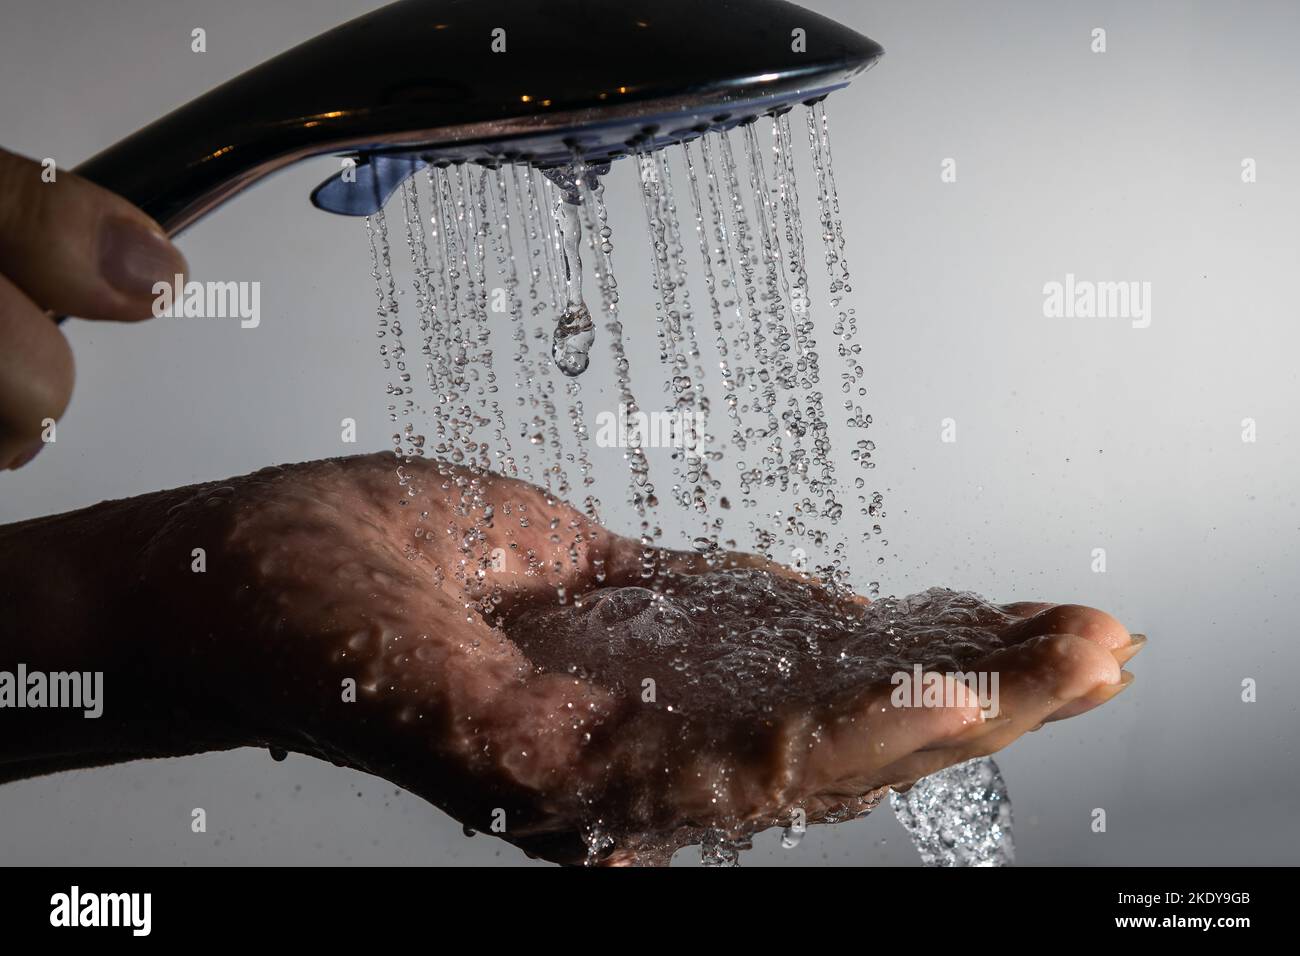 https://c8.alamy.com/comp/2KDY9GB/shower-head-and-human-hand-2KDY9GB.jpg